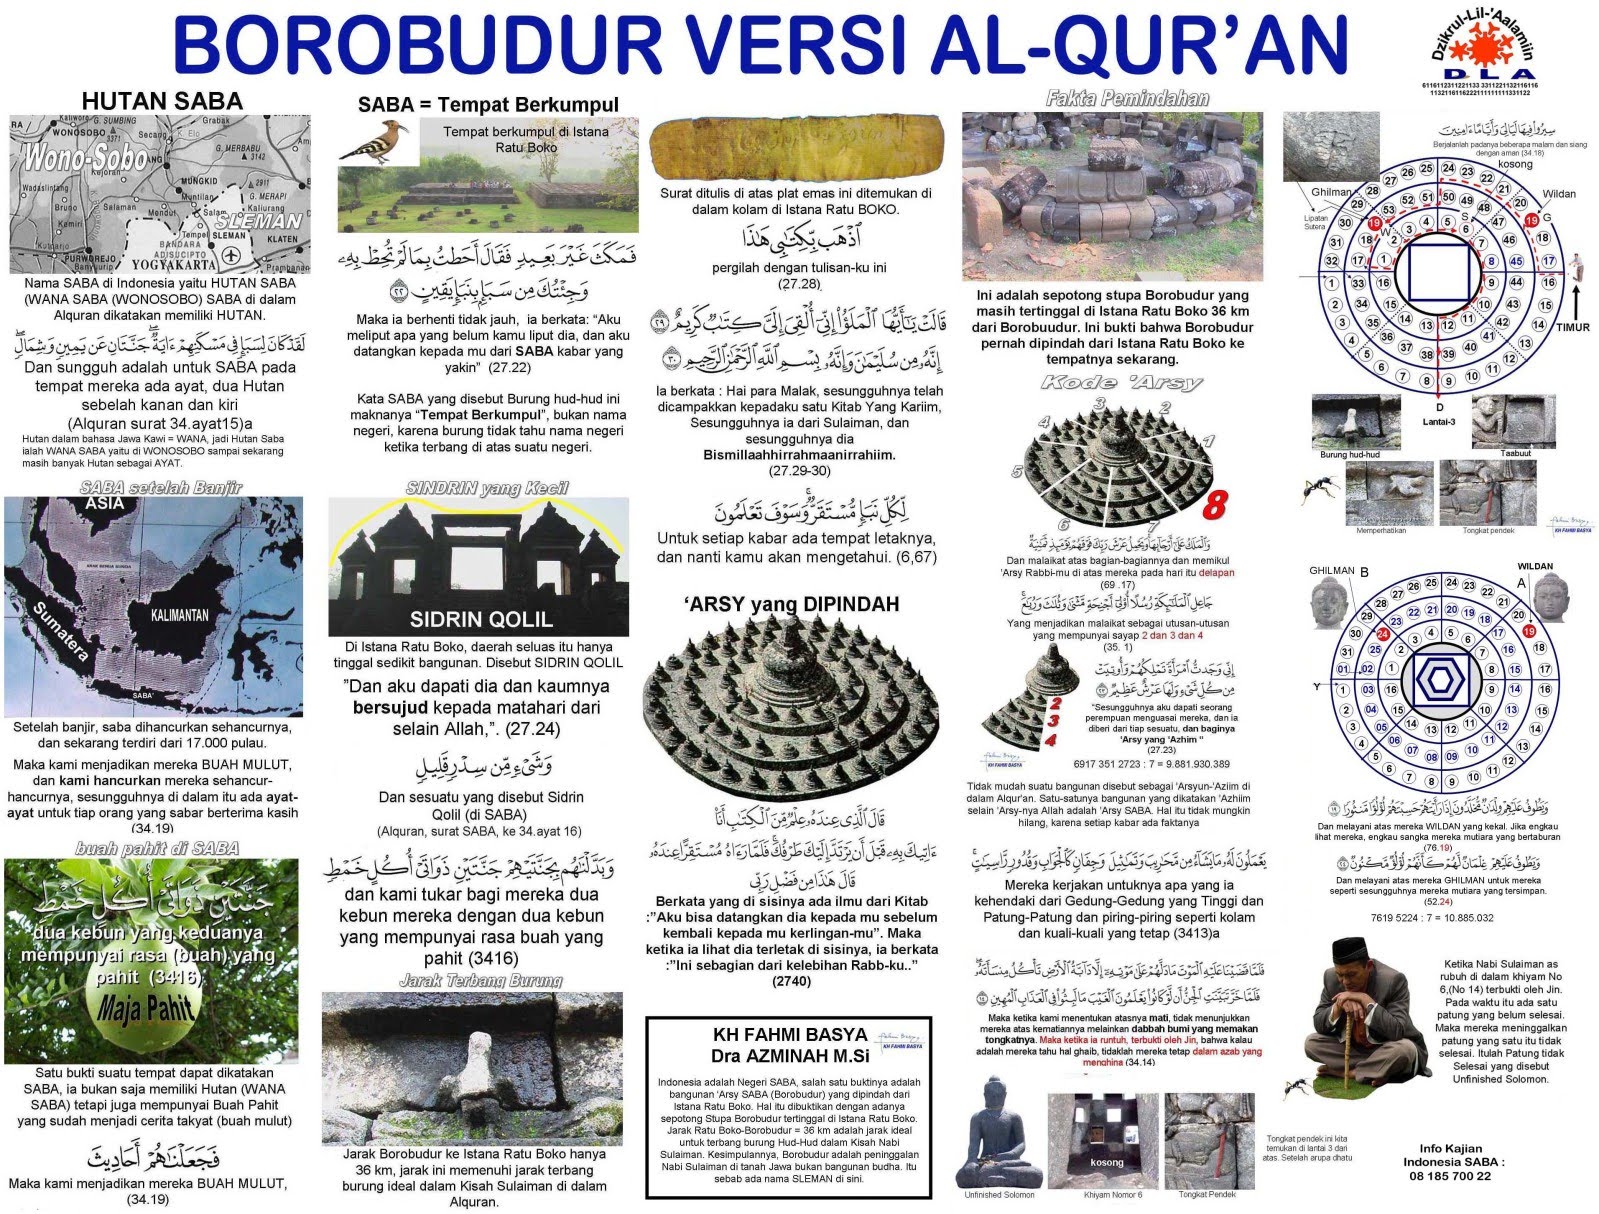 Benarkah Borobudur Peninggalan dari Nabi Sulaiman 